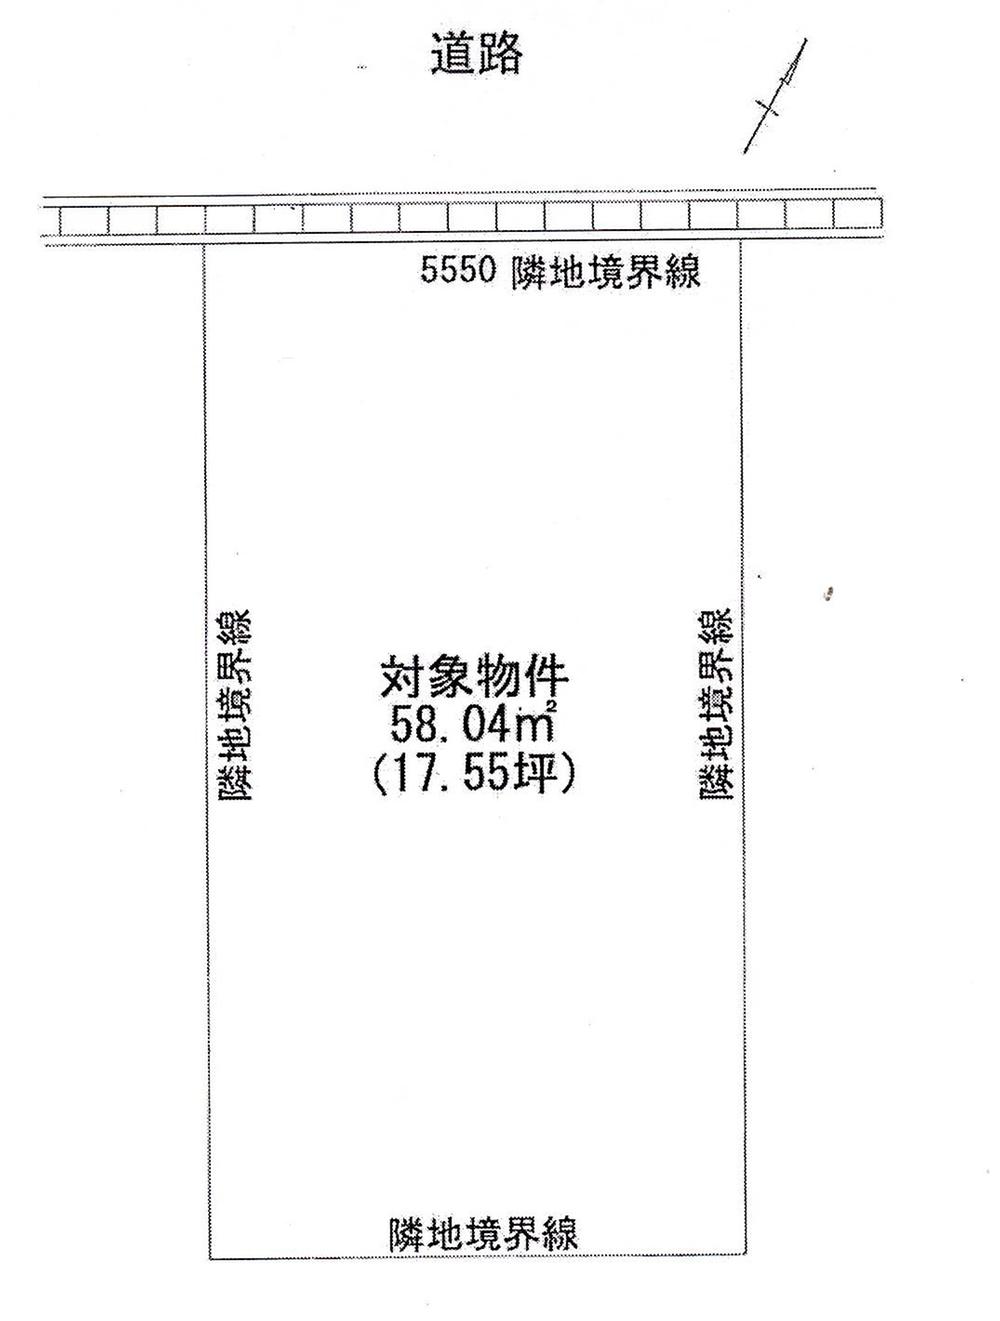 Compartment figure. Land price 9 million yen, Land area 58.08 sq m